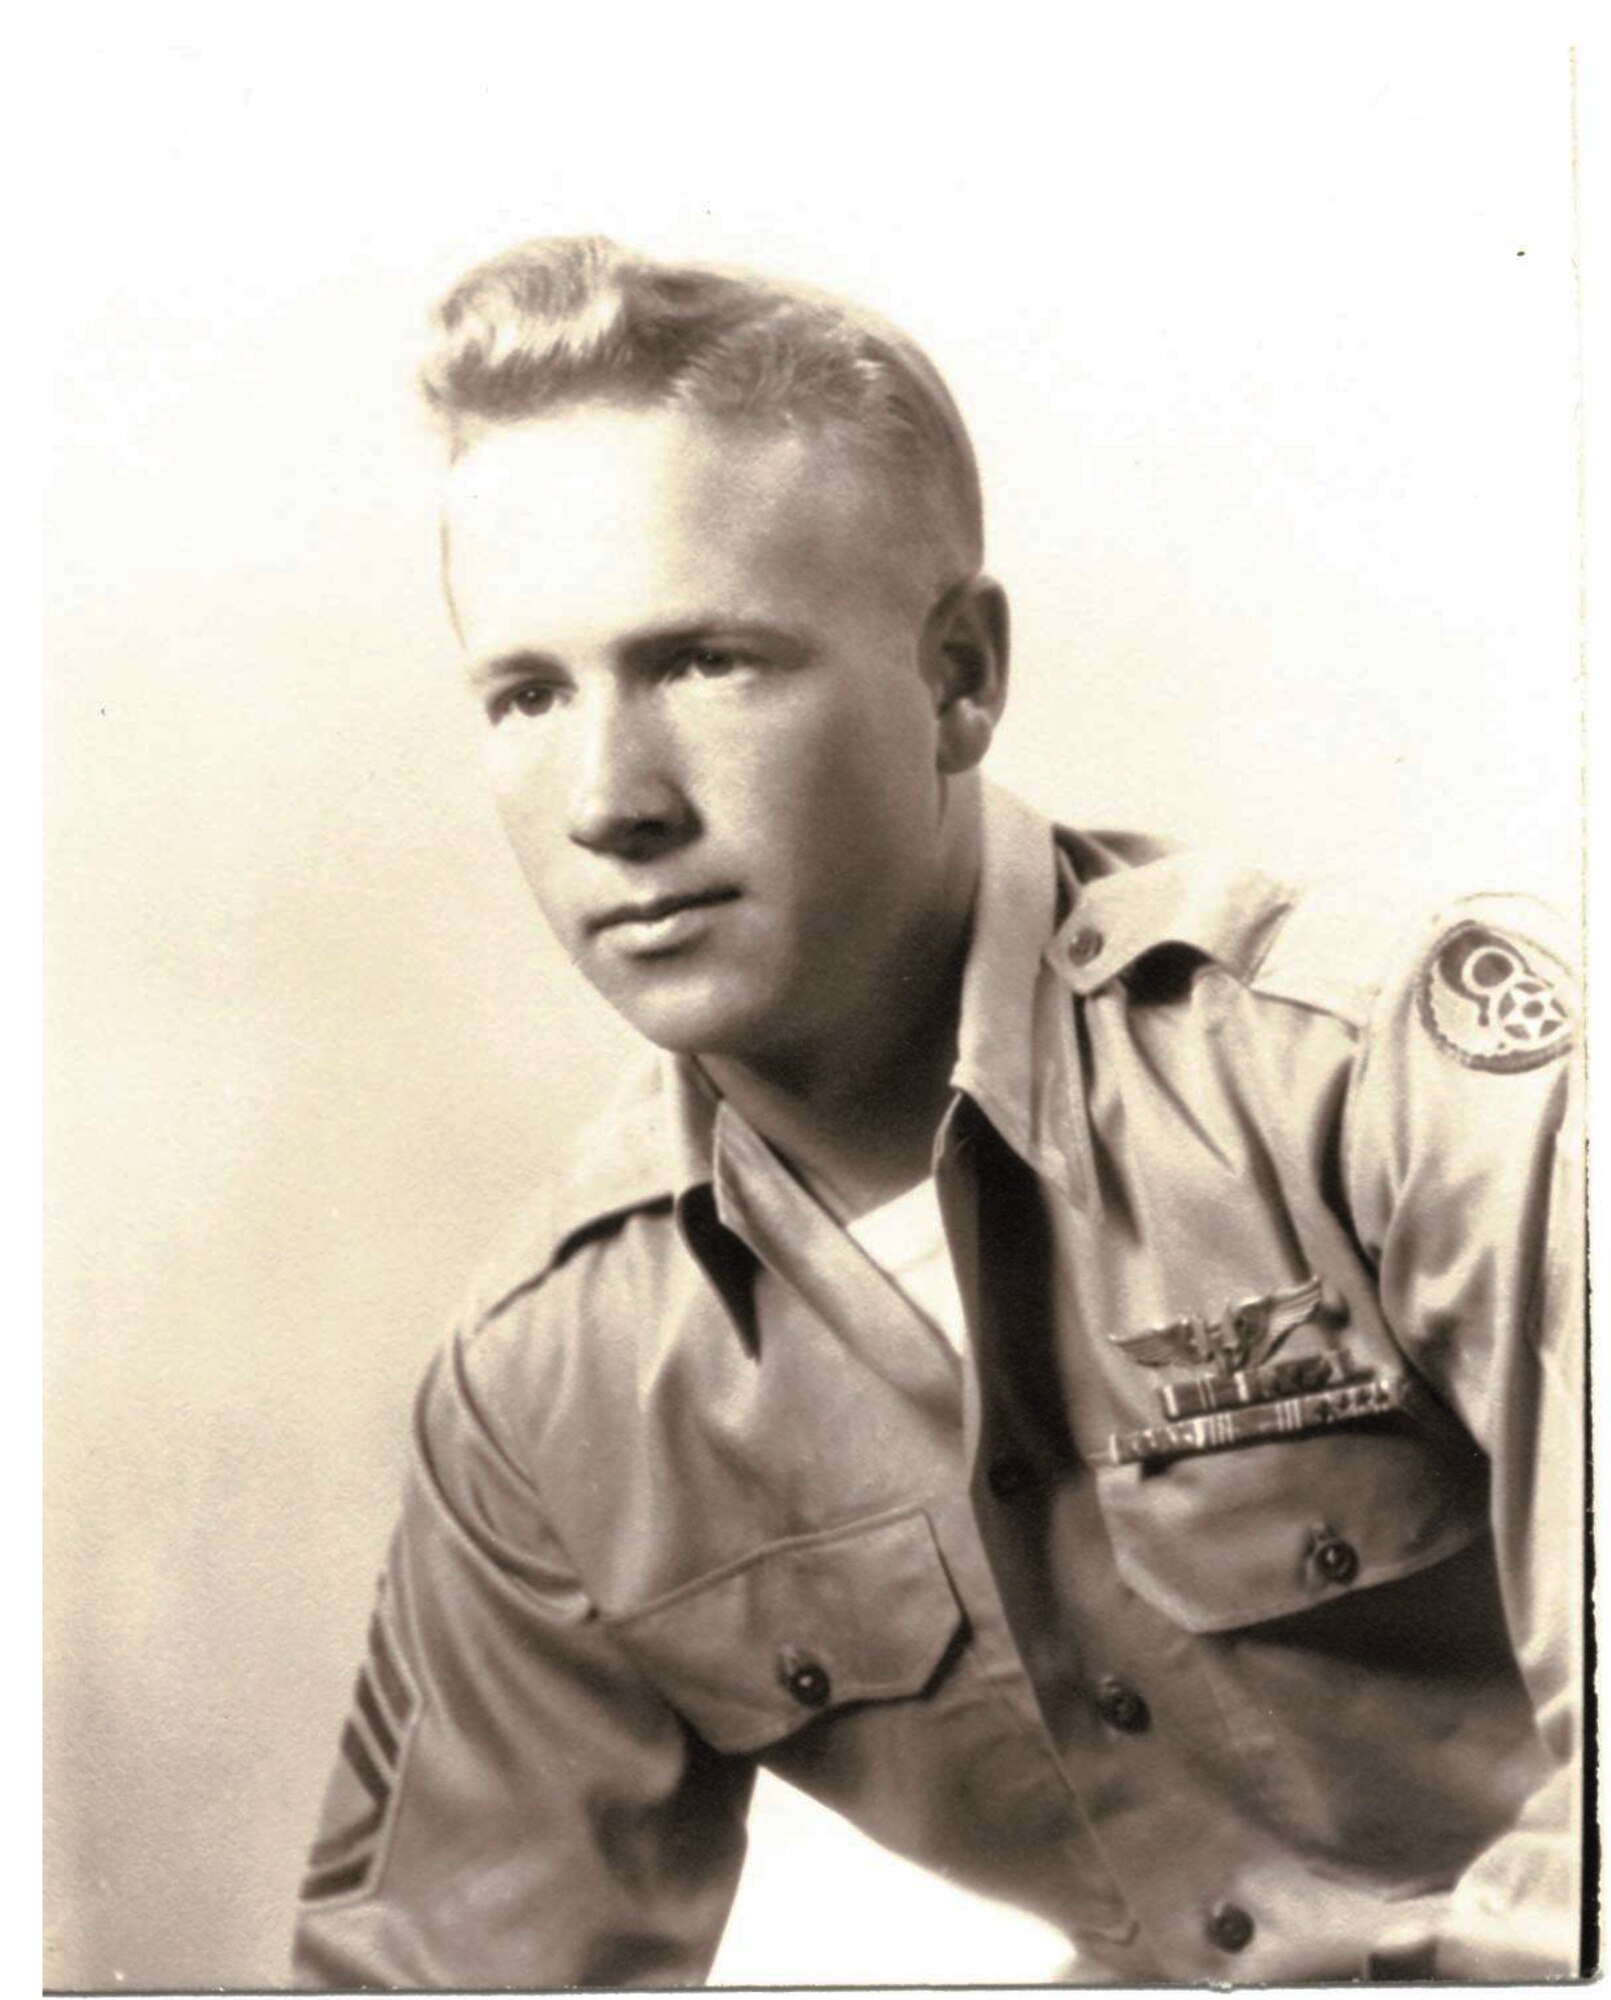 A photo of U.S. Army Air Corps Tech. Sgt. Earl W. Haun during World War II.